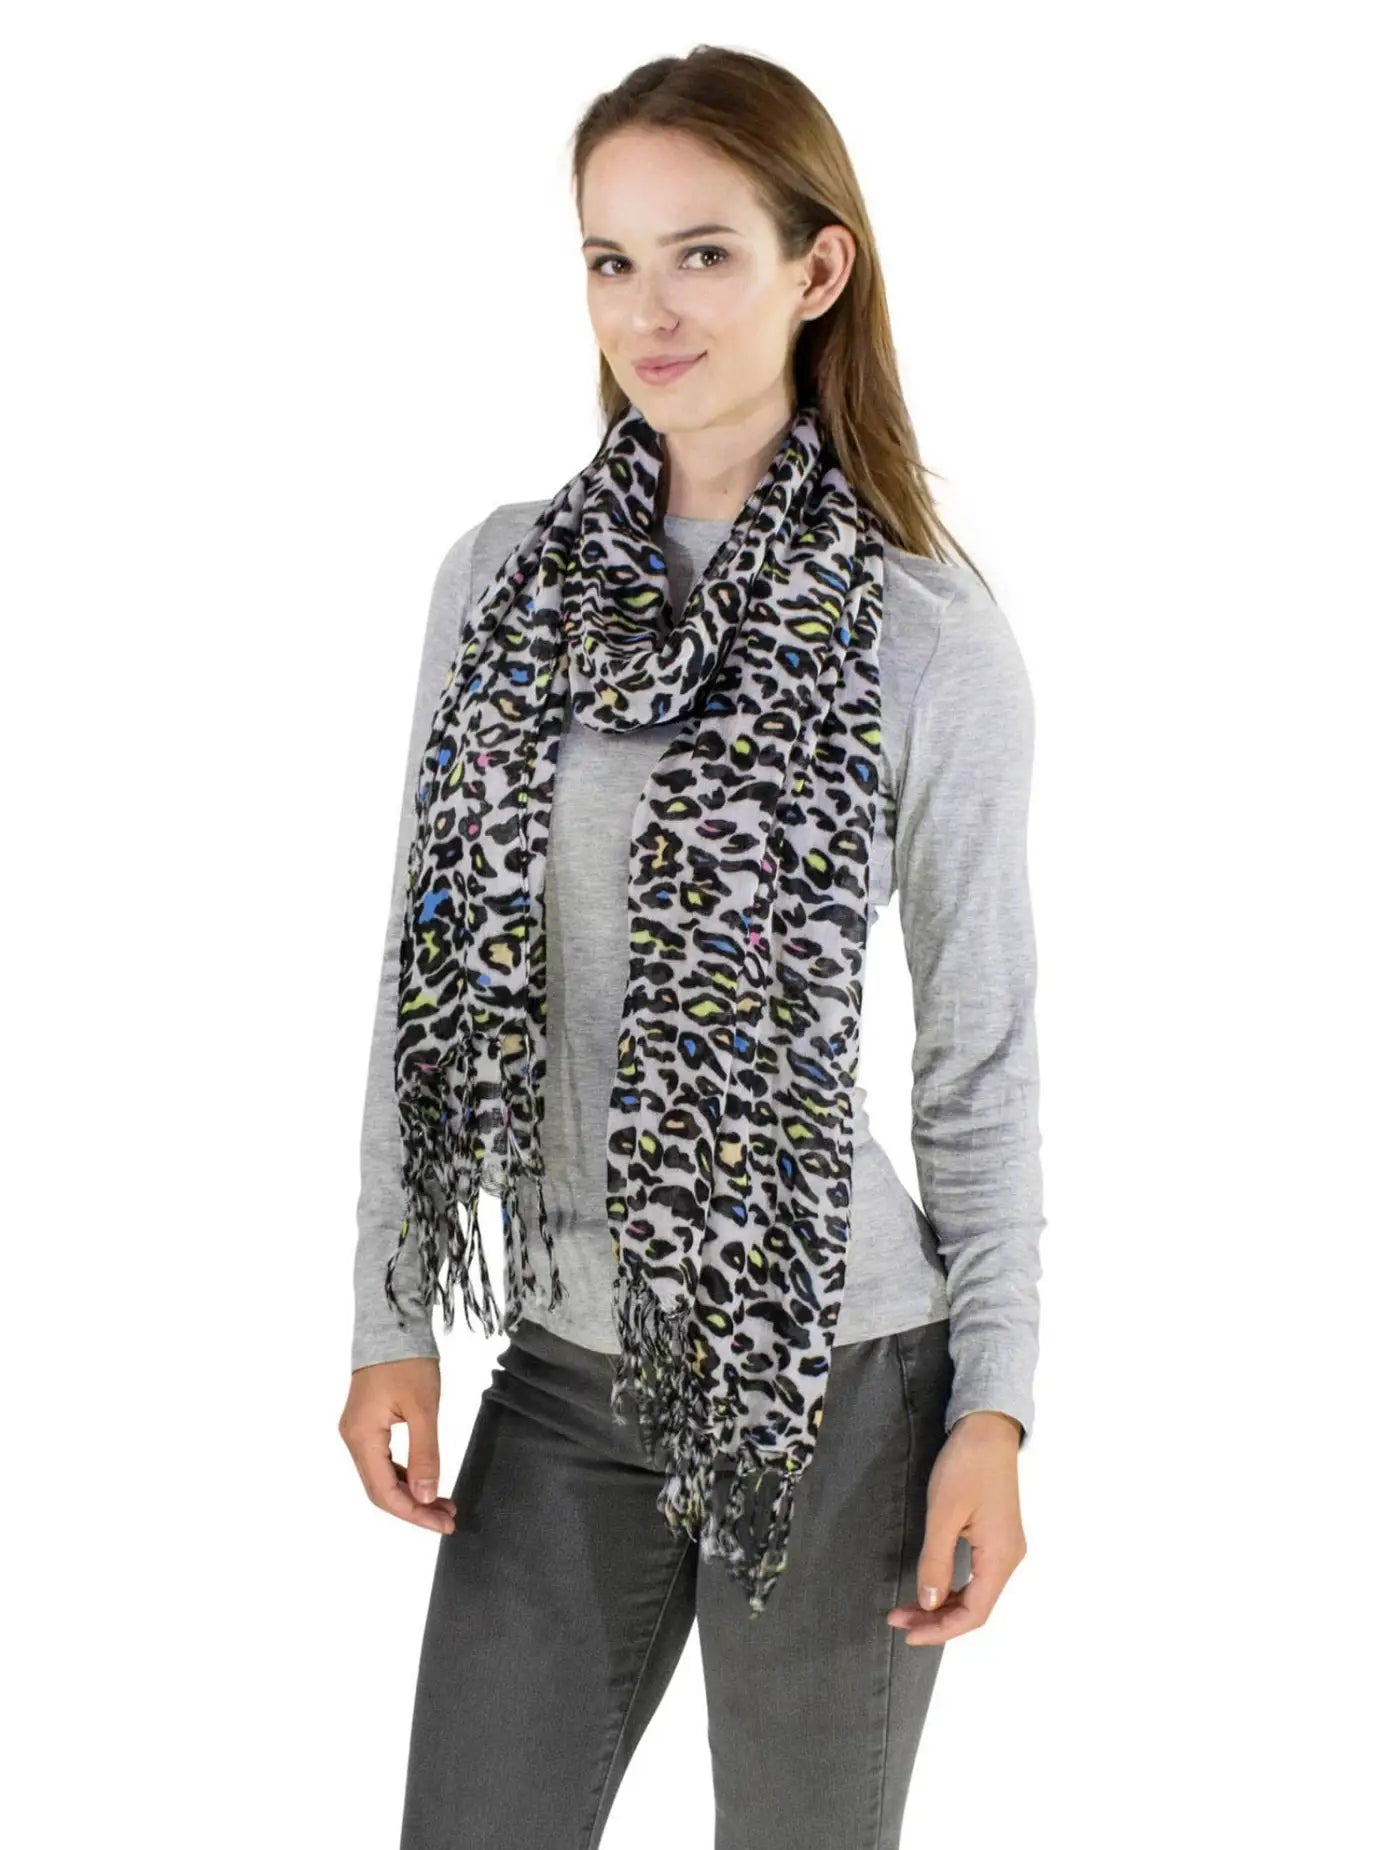 Stylish woman wearing colourful leopard print scarf